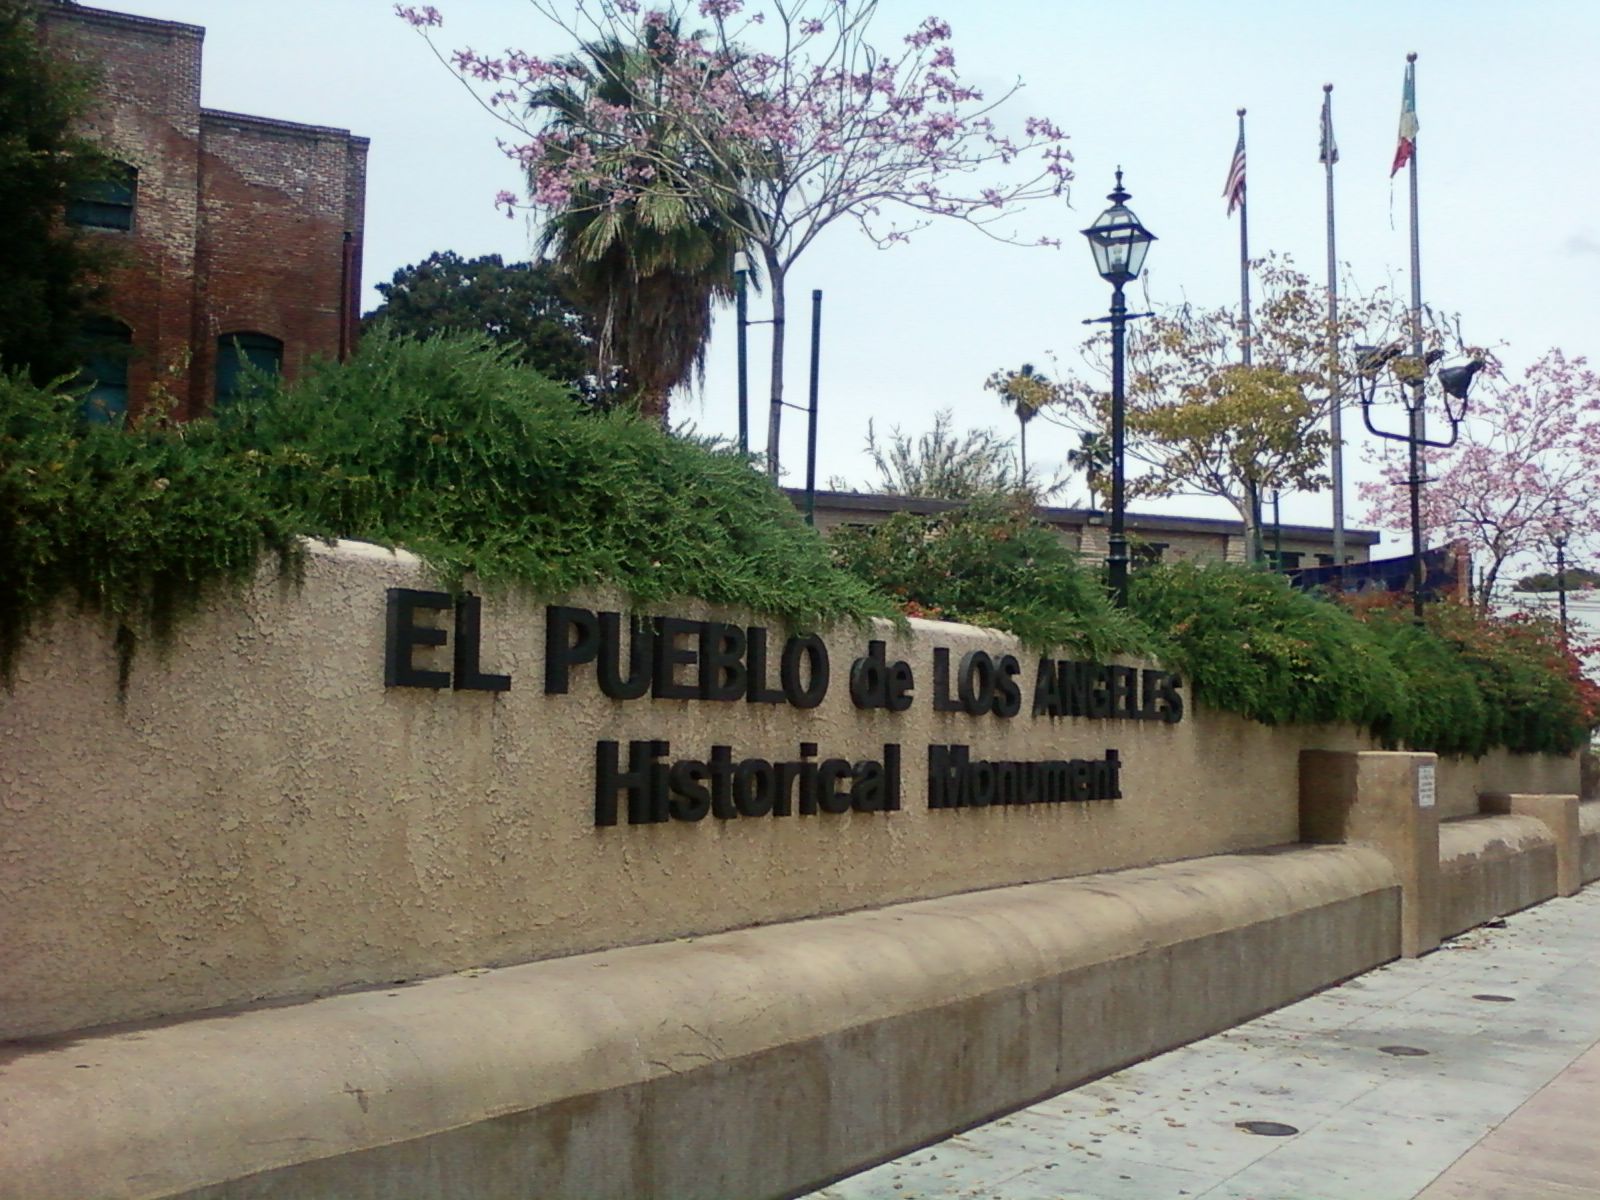 /assets/contentimages/EL_PUEBLO_DE_LOS_ANANGELES_HISTRORIC_MONUMENT.jpg